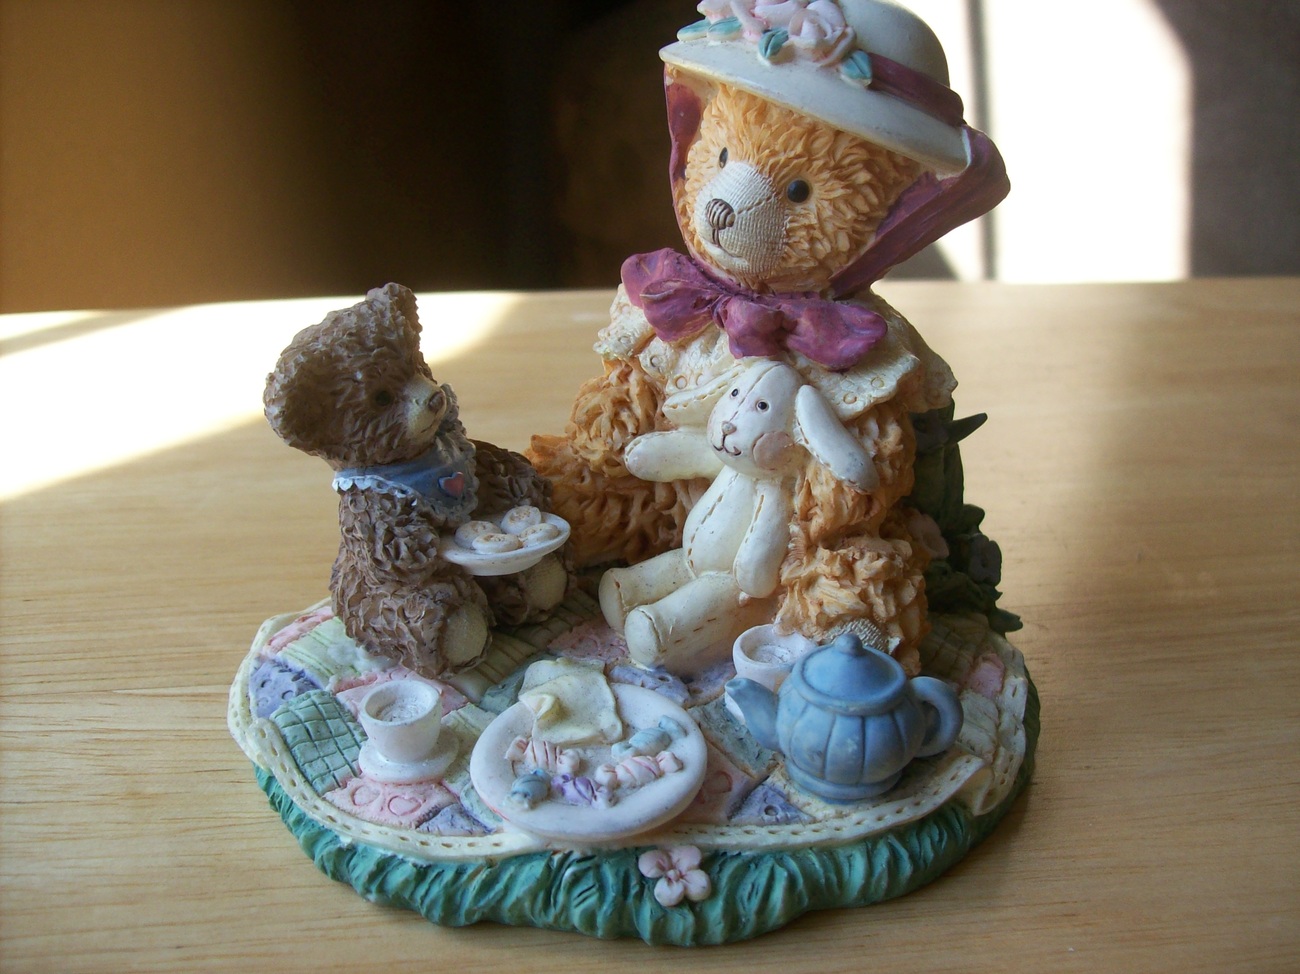 Bainbridge Bears Collection “Sweet Treats with Friends” Figurine - $15.00